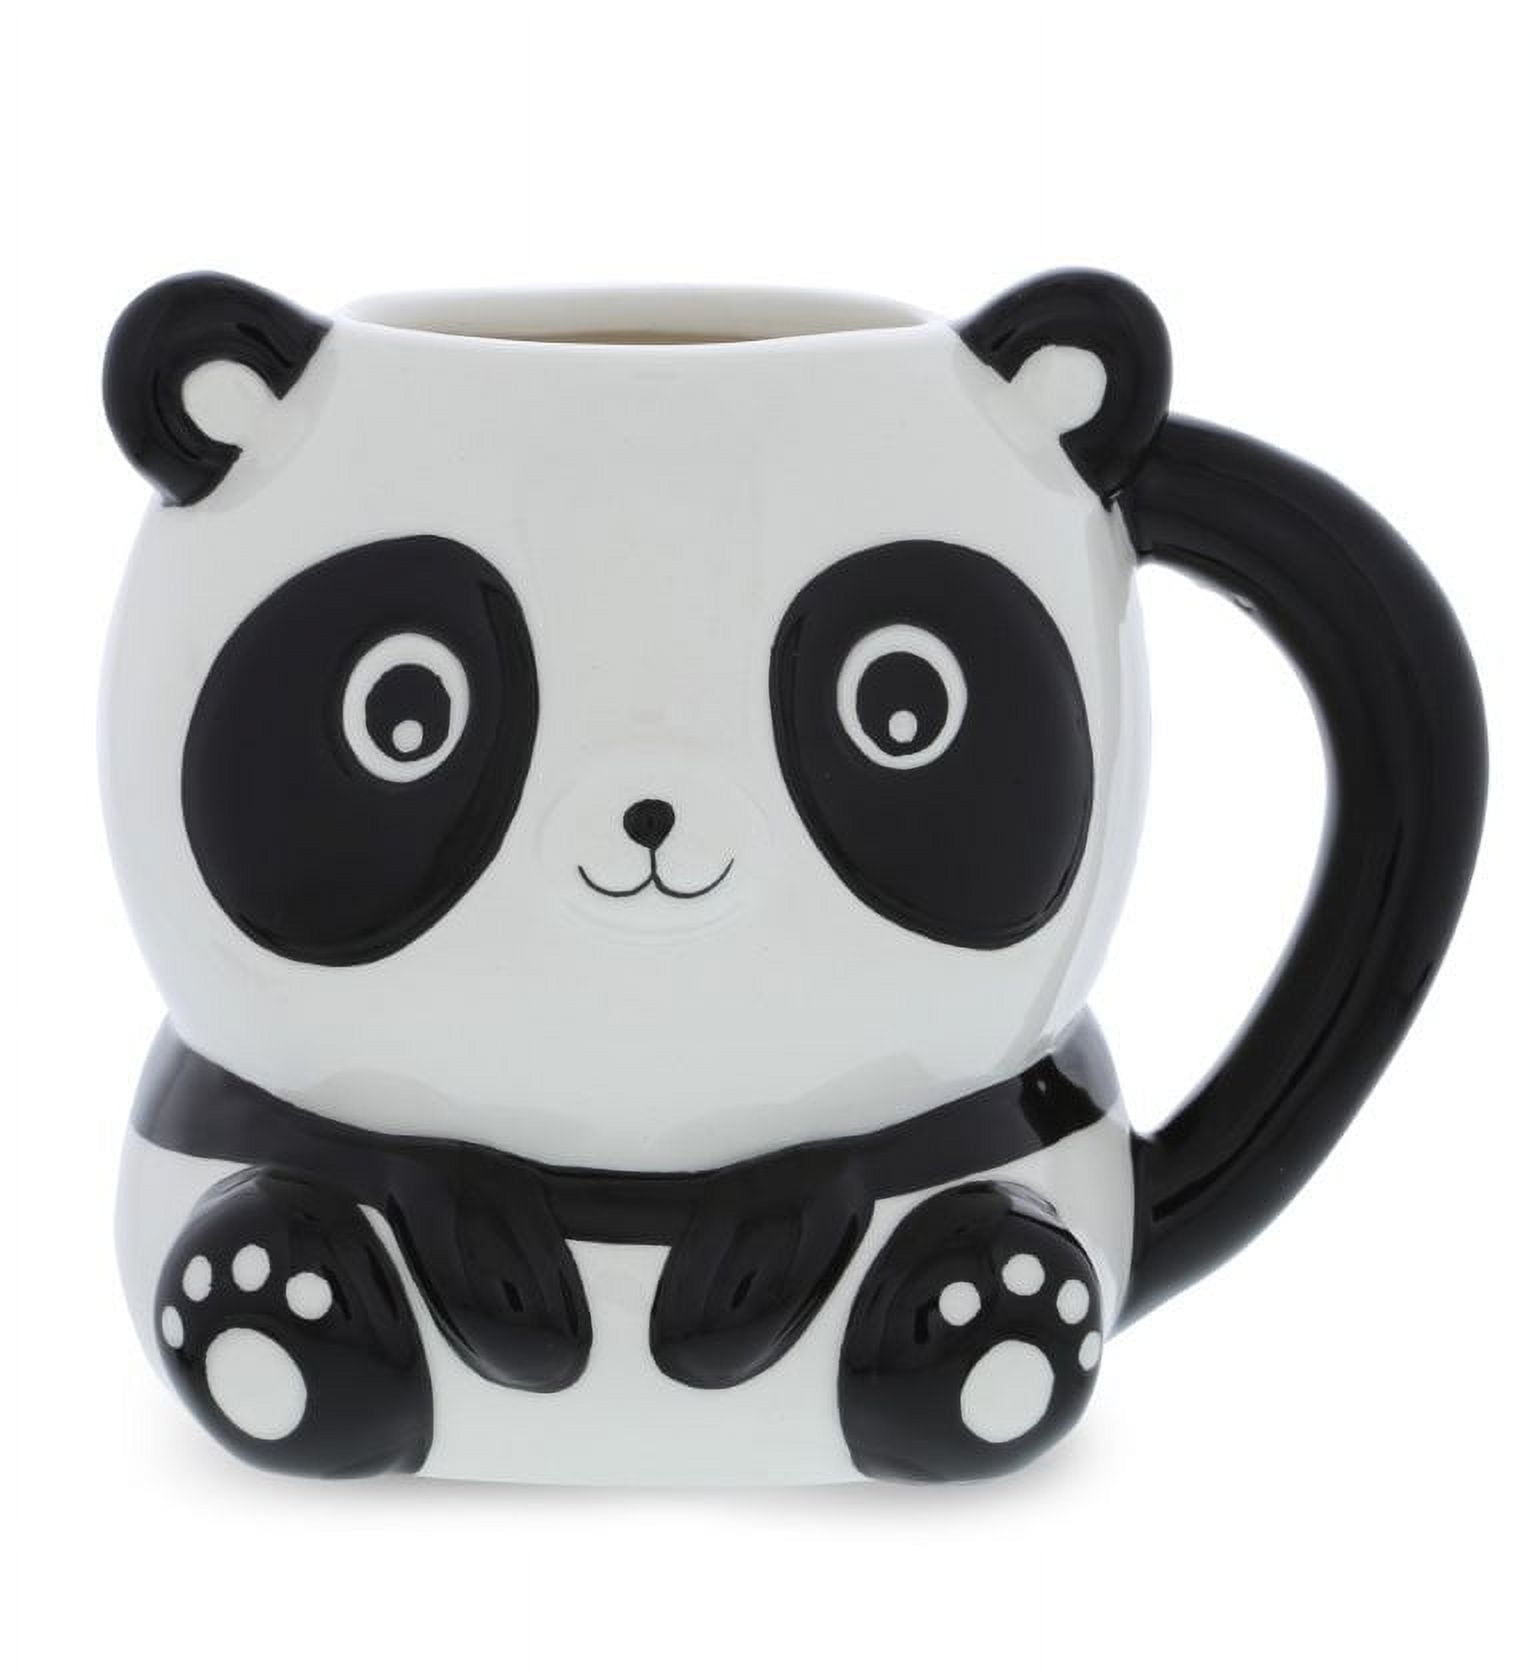 MUGNIV Novelty Panda Mug - Cute Coffee Mugs for Women and Funny Coffee Mug  for Men, Cool Ceramic Animal Coffee Mug Gift, Surprise Birthday Gift  Novelty Coffee Mugs for Hot and Cold